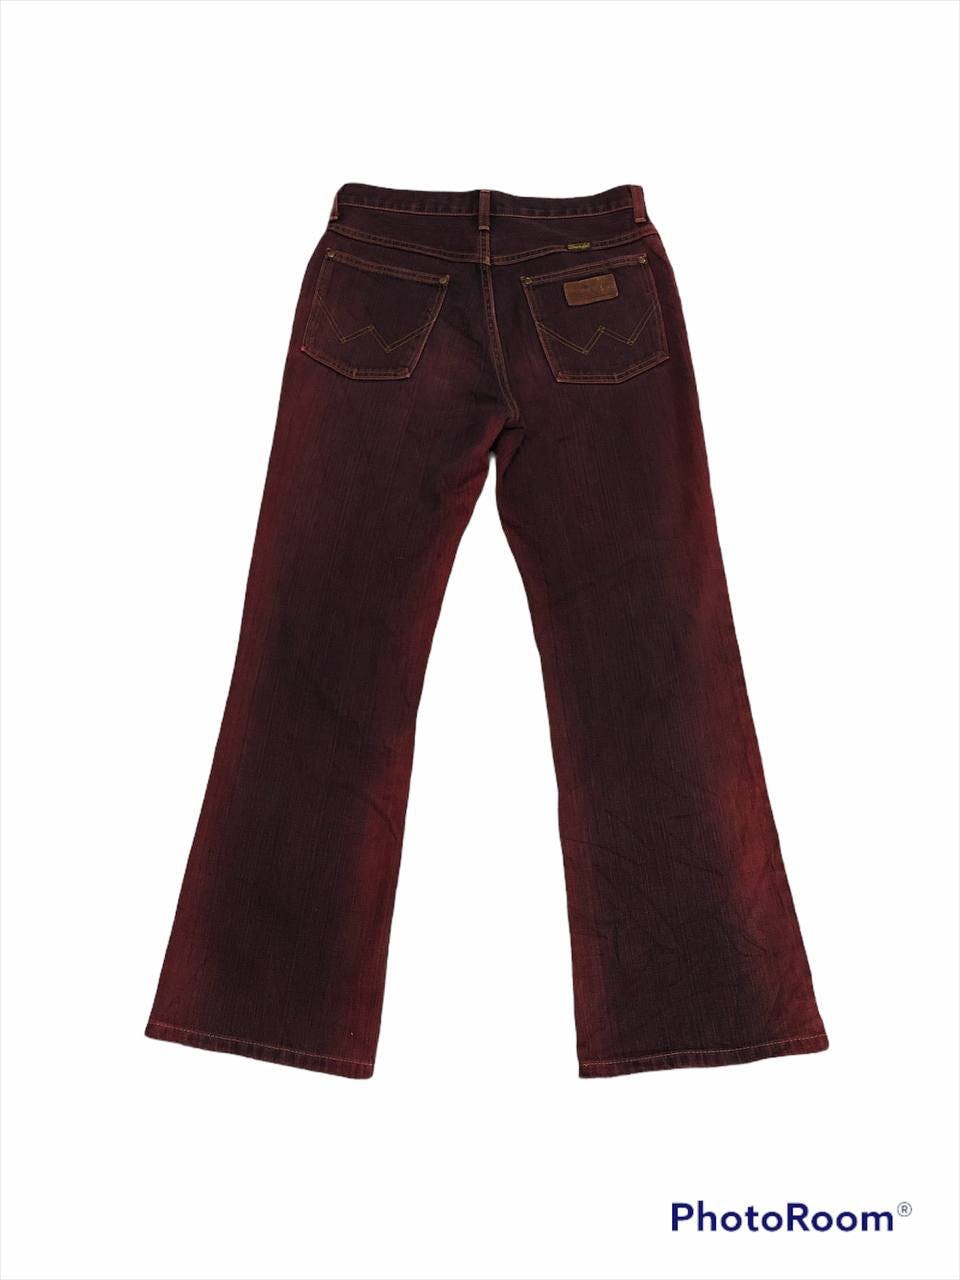 Vintage Wrangler Faded Marron Denim Pants - 5